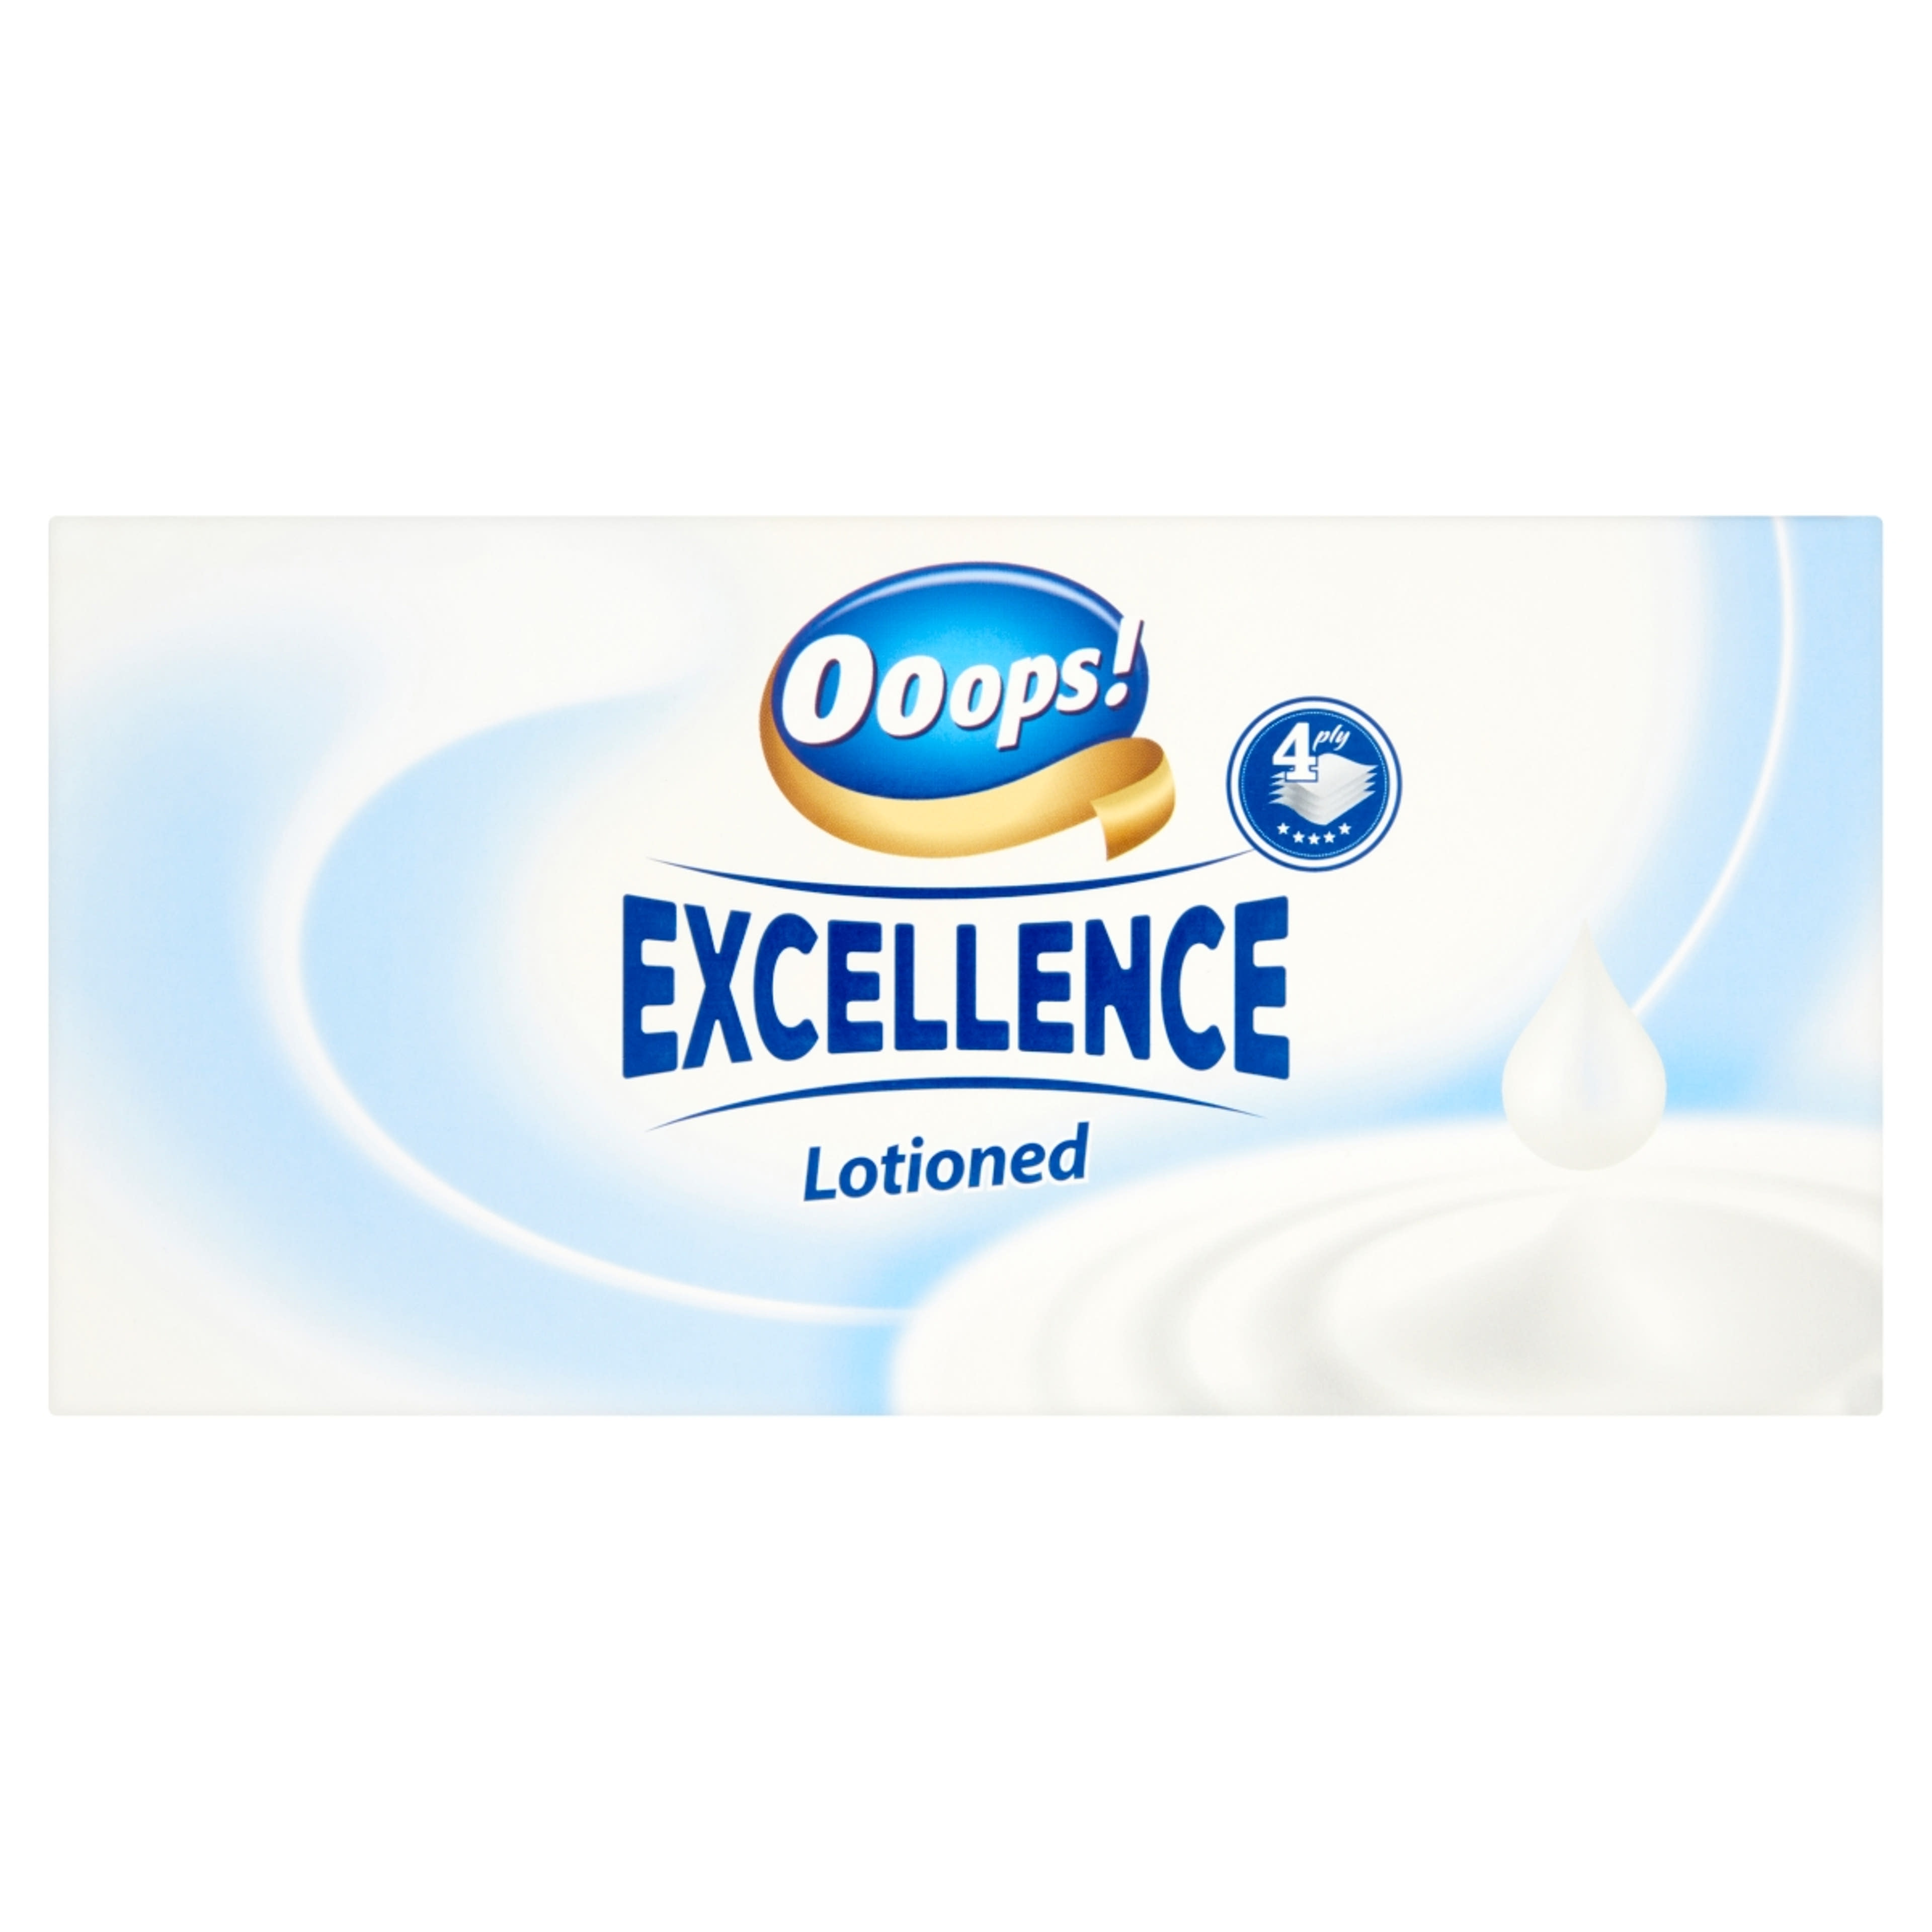 OOOPS! Excellence Lotioned 4 rétegű dobozos papírzsebkendő - 80 db